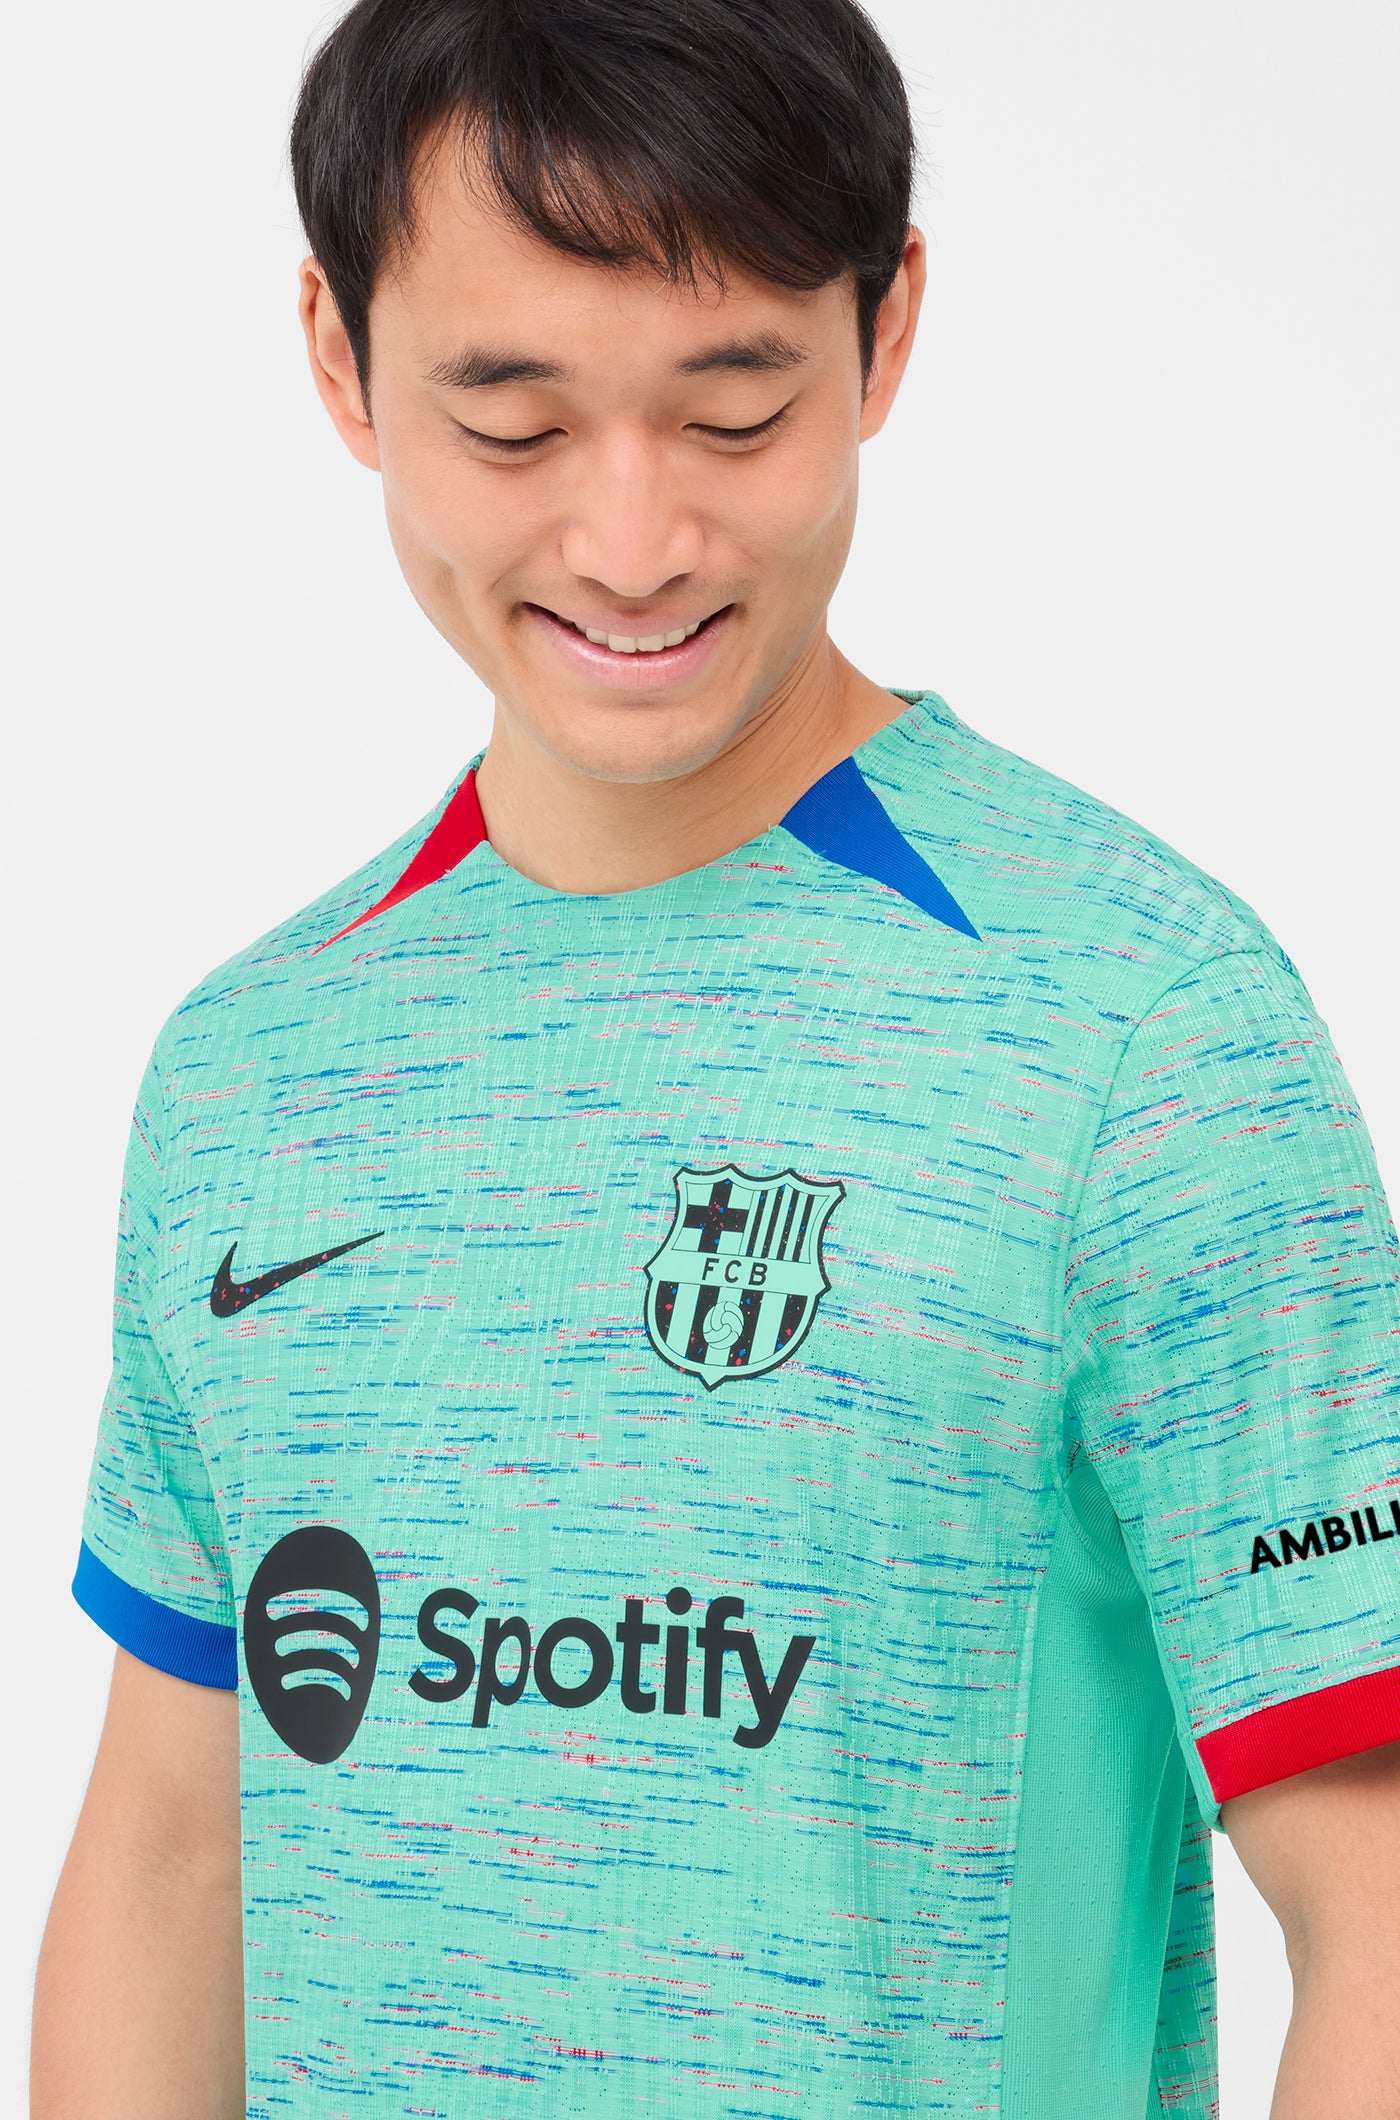 LFP FC Barcelona third shirt 23/24 Player’s Edition